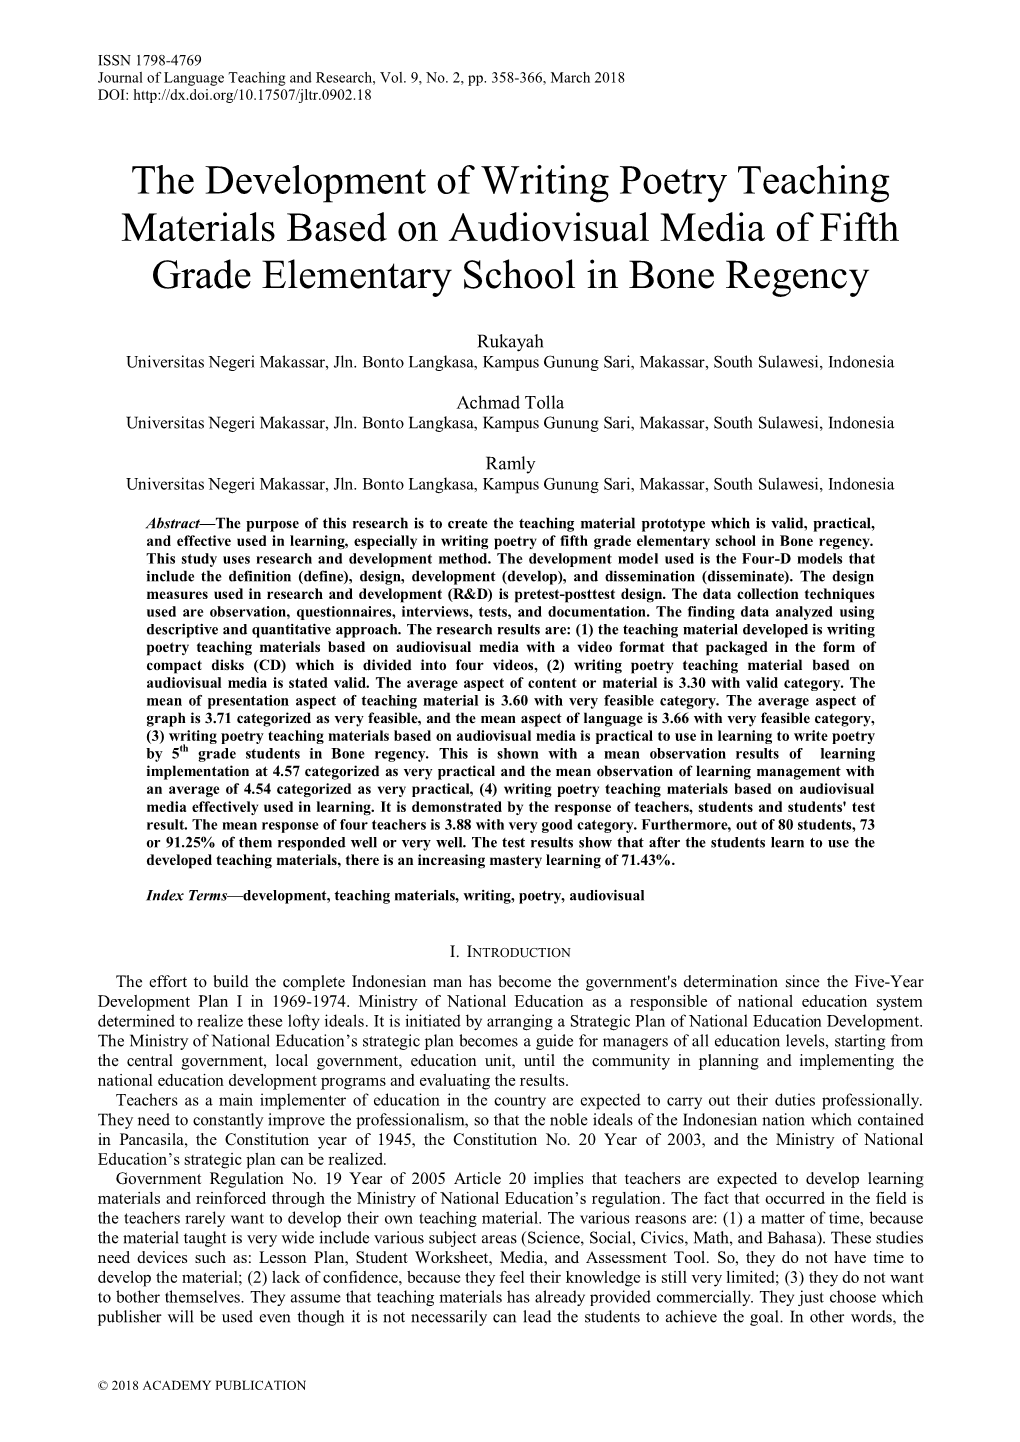 The Development of Writing Poetry Teaching Materials Based on Audiovisual Media of Fifth Grade Elementary School in Bone Regency